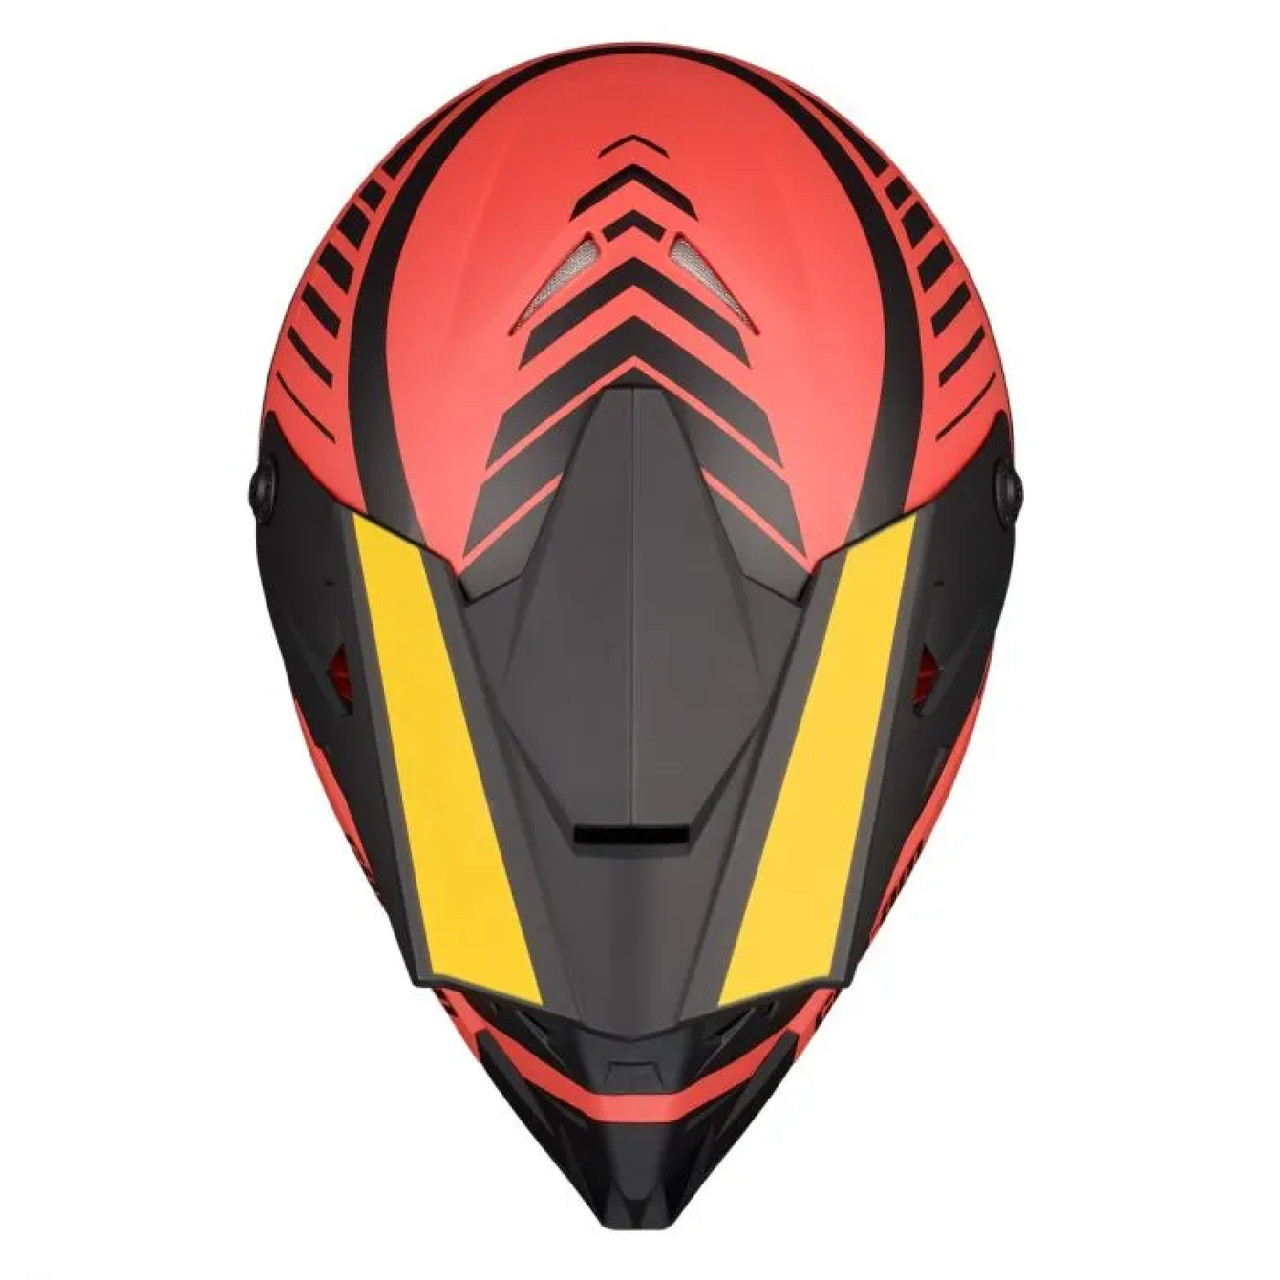 Can-Am New OEM Unisex X-Large Red XC-4 Cross Team Helmet, 4486511230